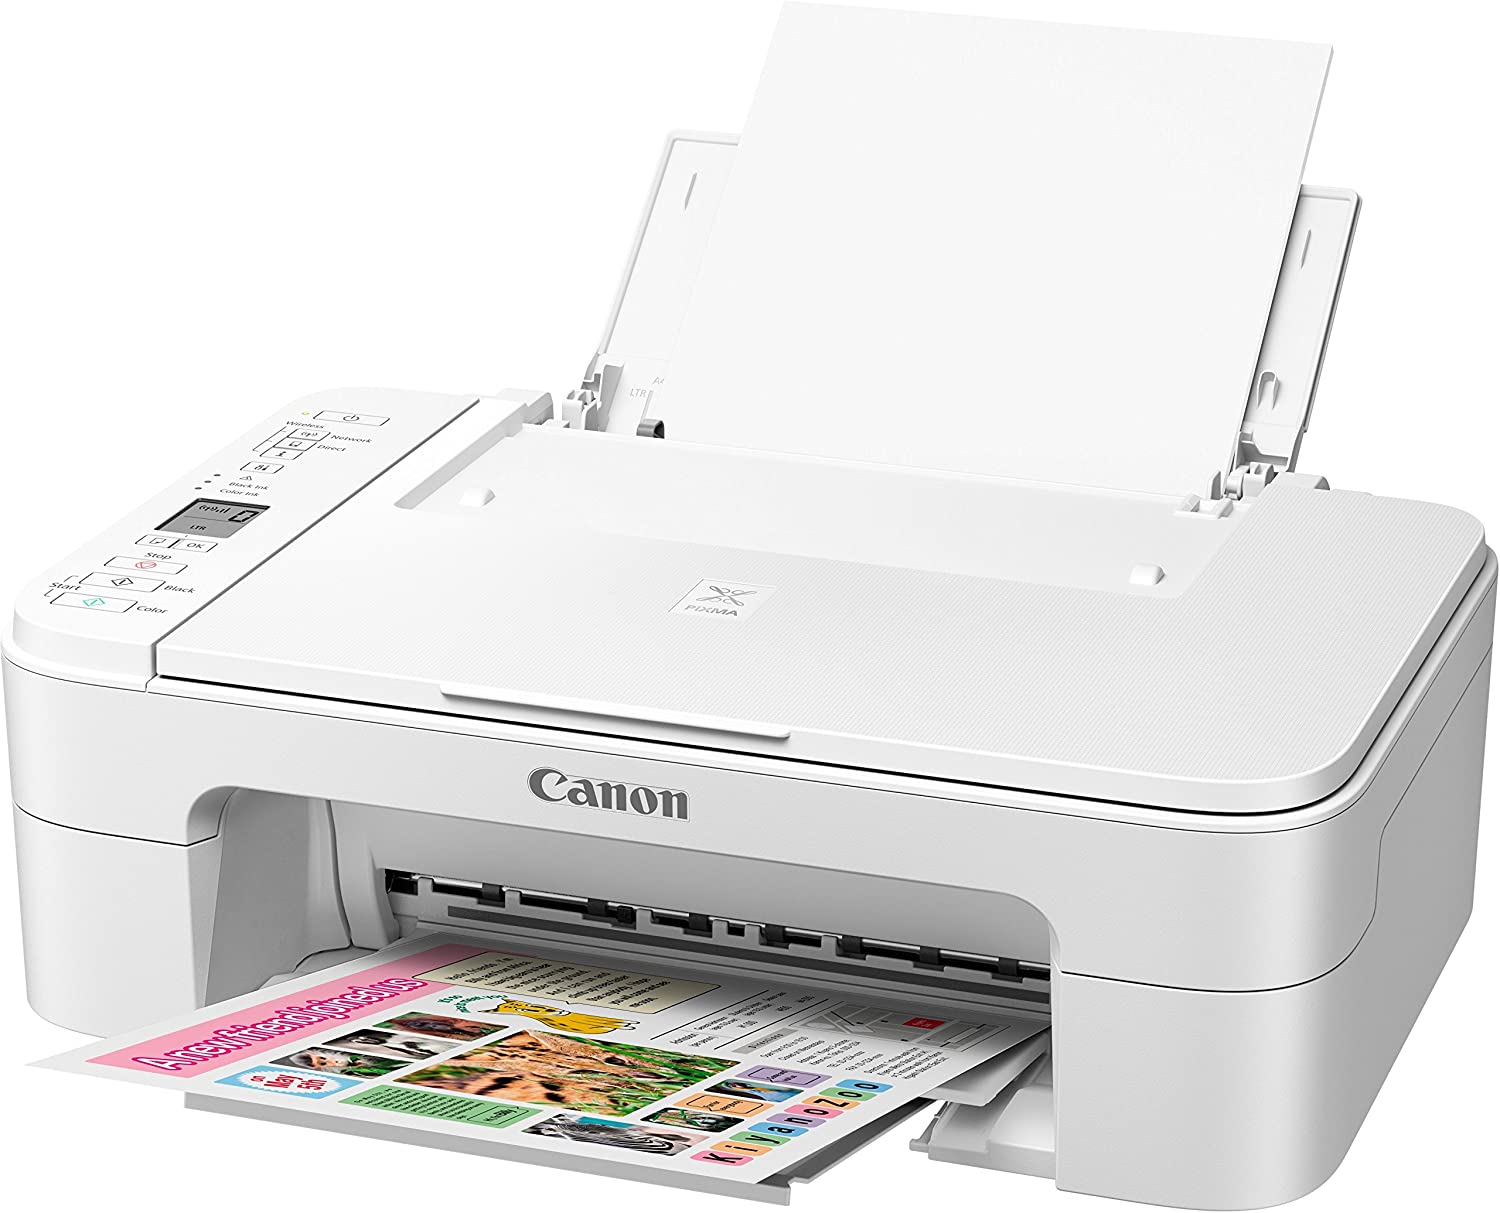 Canon Pixma TS3151 Impresora Multifuncion Color WiFi - Color Blanco